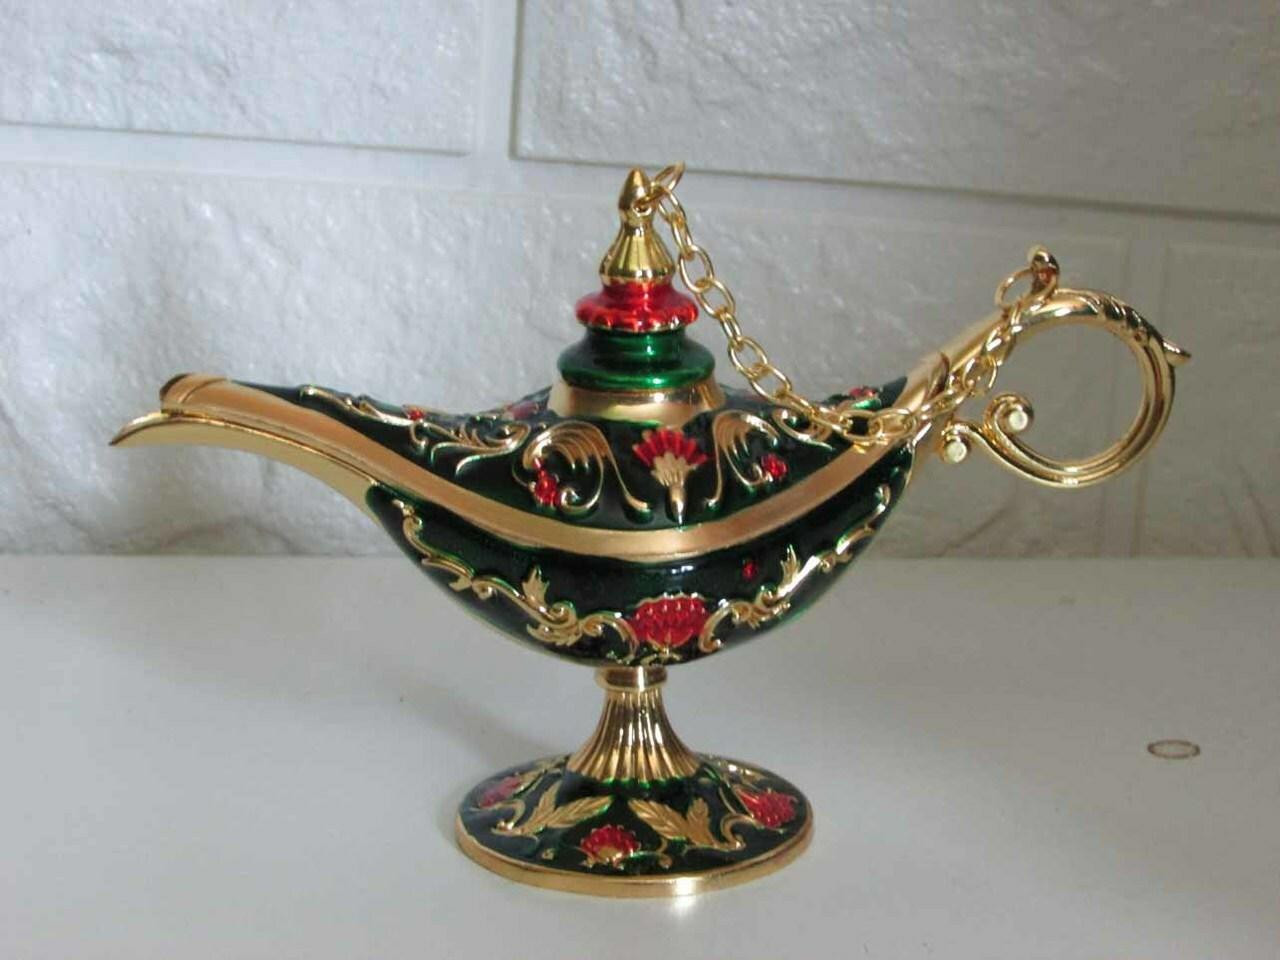 Stunning aladdin brass genie lamp for Decor and Souvenirs